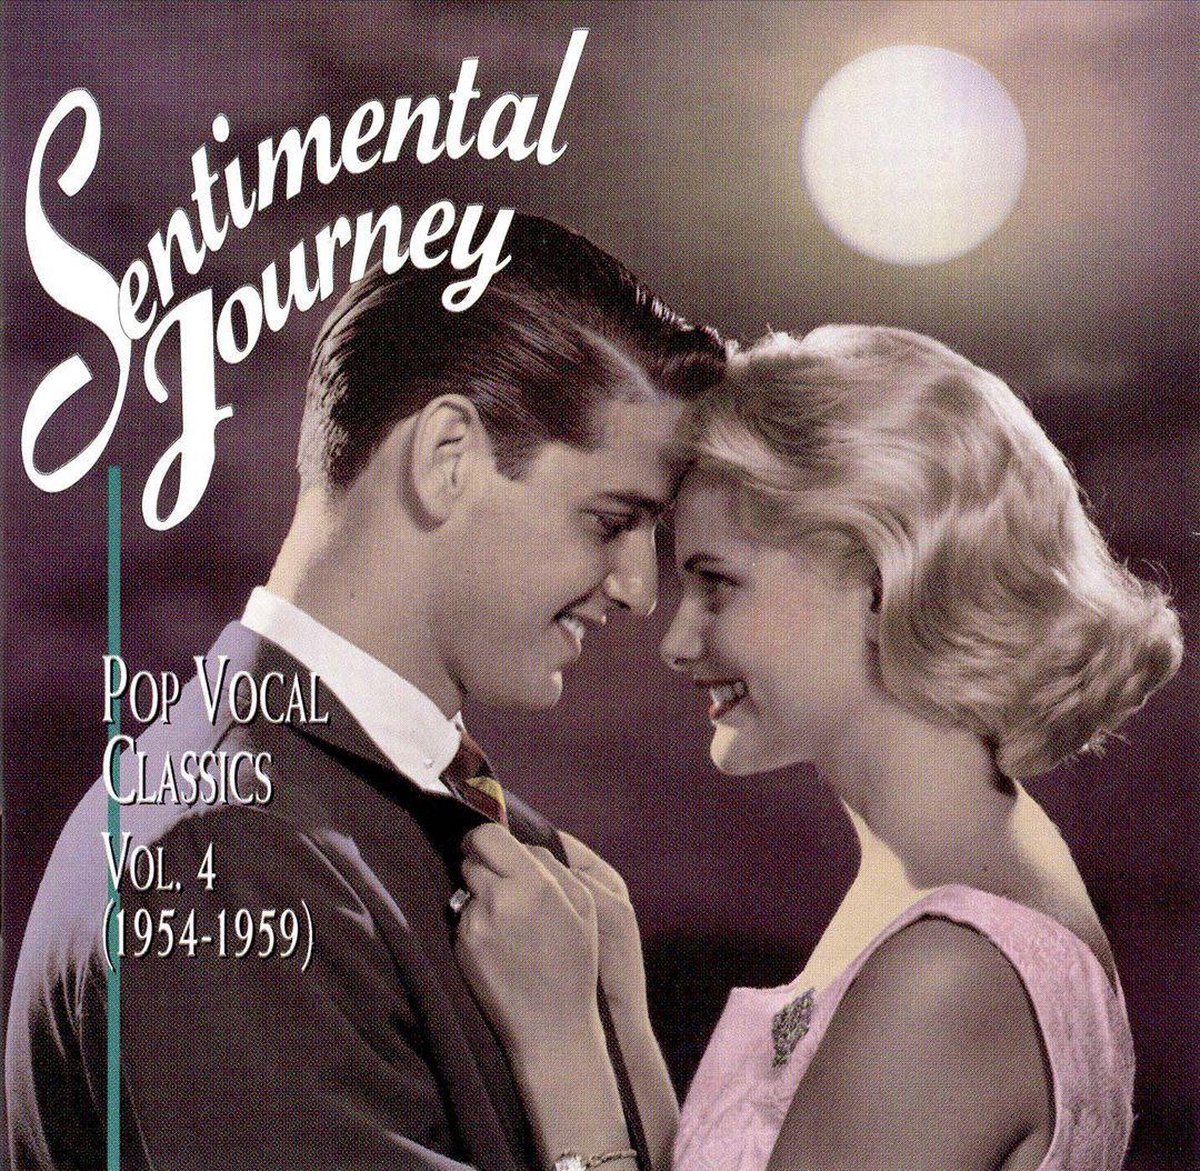 Sentimental Journey: Pop Vocal Classics Vol. 4 - various artists